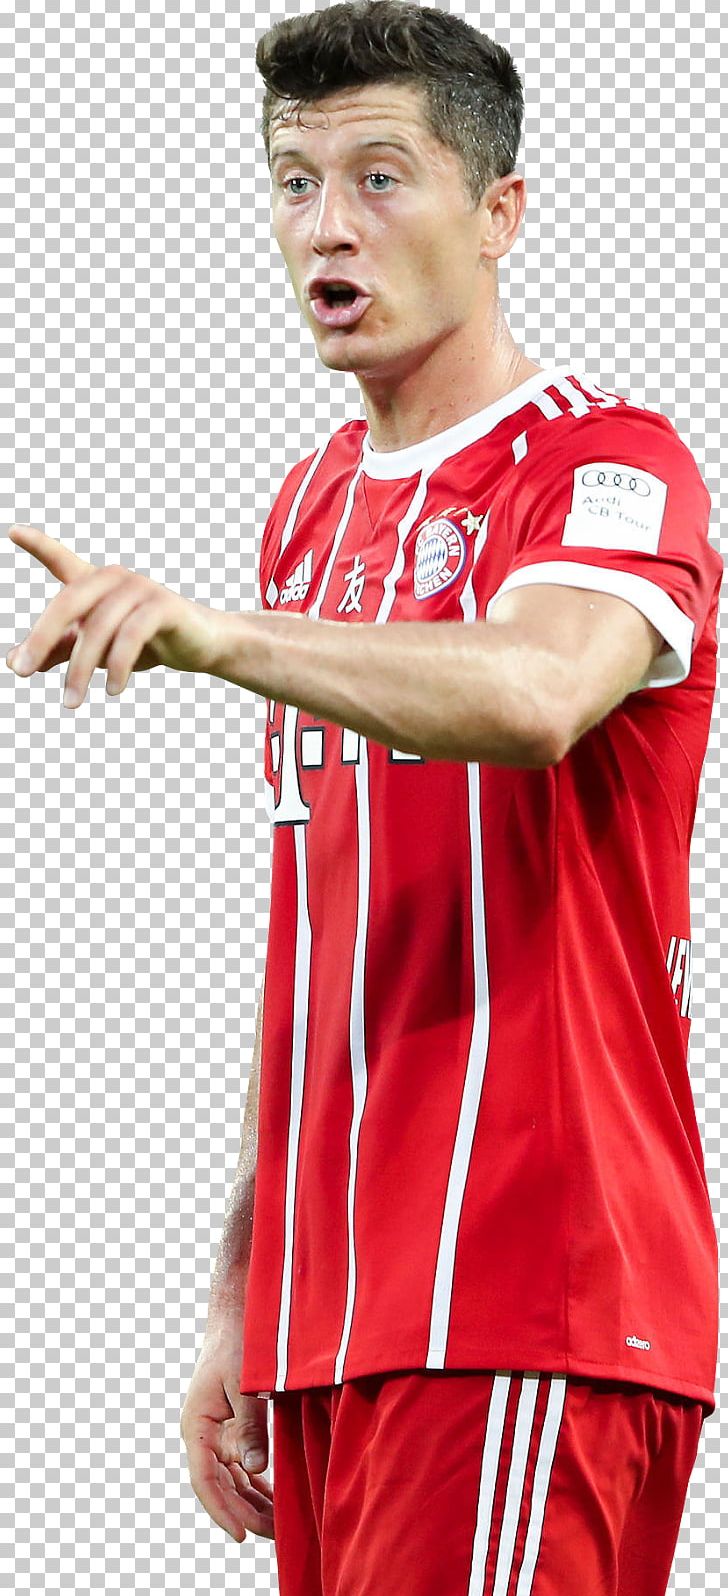 Robert Lewandowski FC Bayern Munich Soccer Player Football Player PNG, Clipart, Boy, Clothing, Fc Bayern Munich, Football, Football Player Free PNG Download